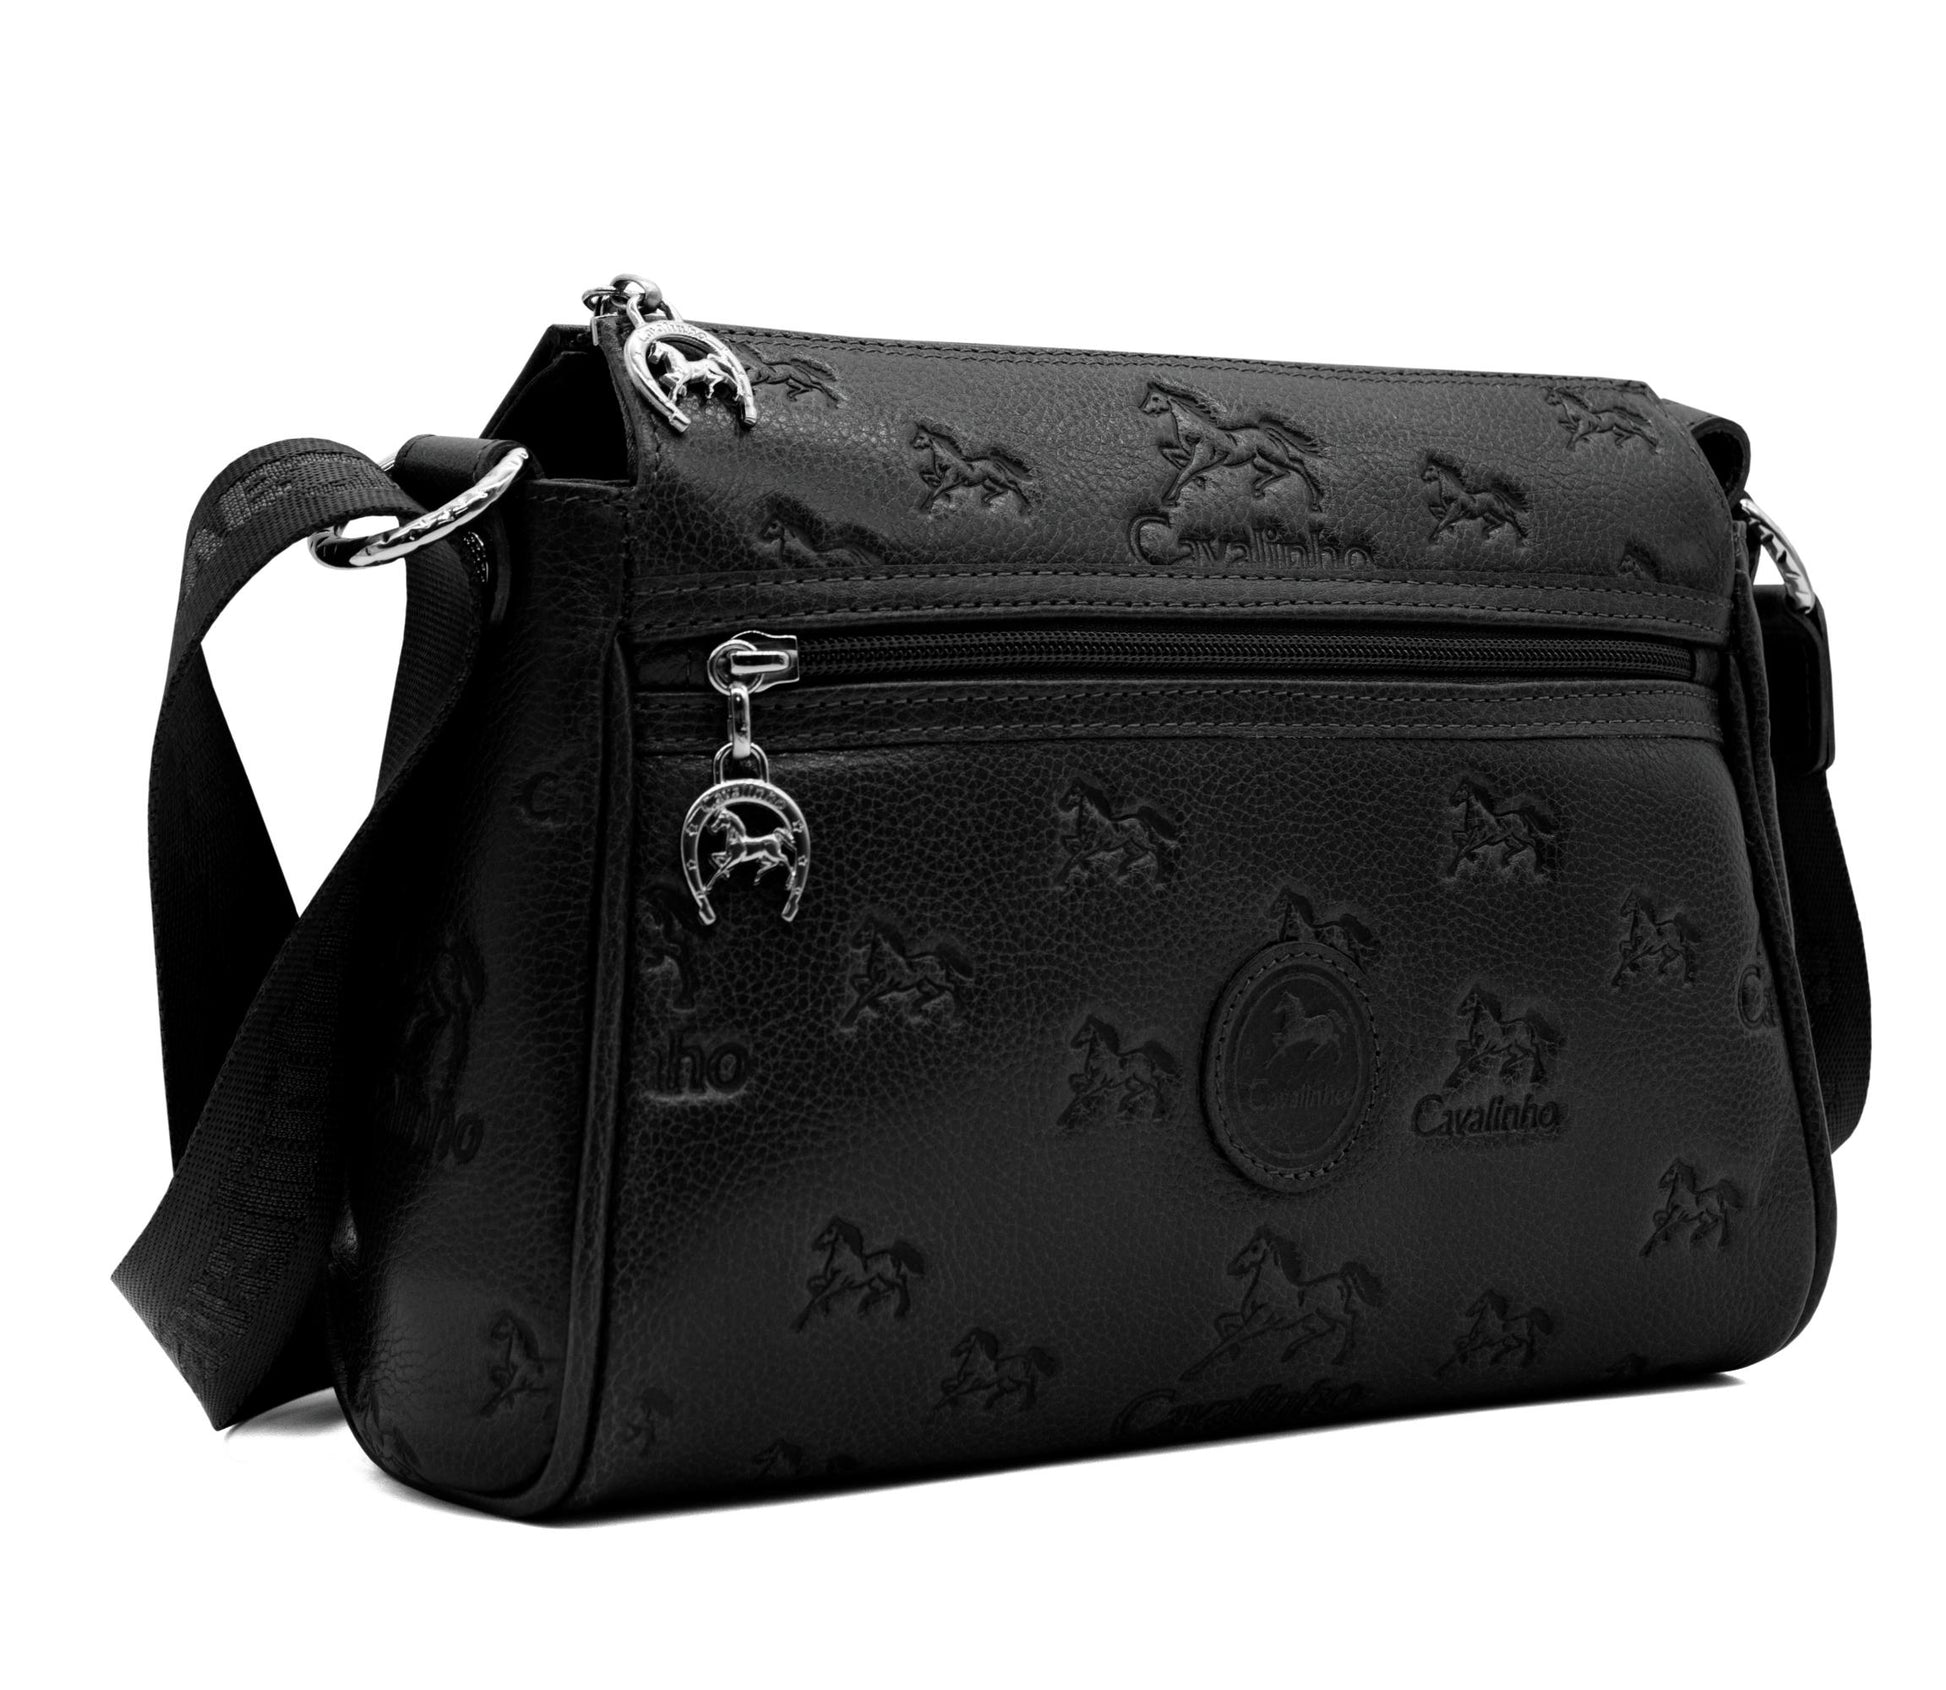 Cavalinho Cavalo Lusitano Leather Crossbody Bag - Black - 18090373.01_2